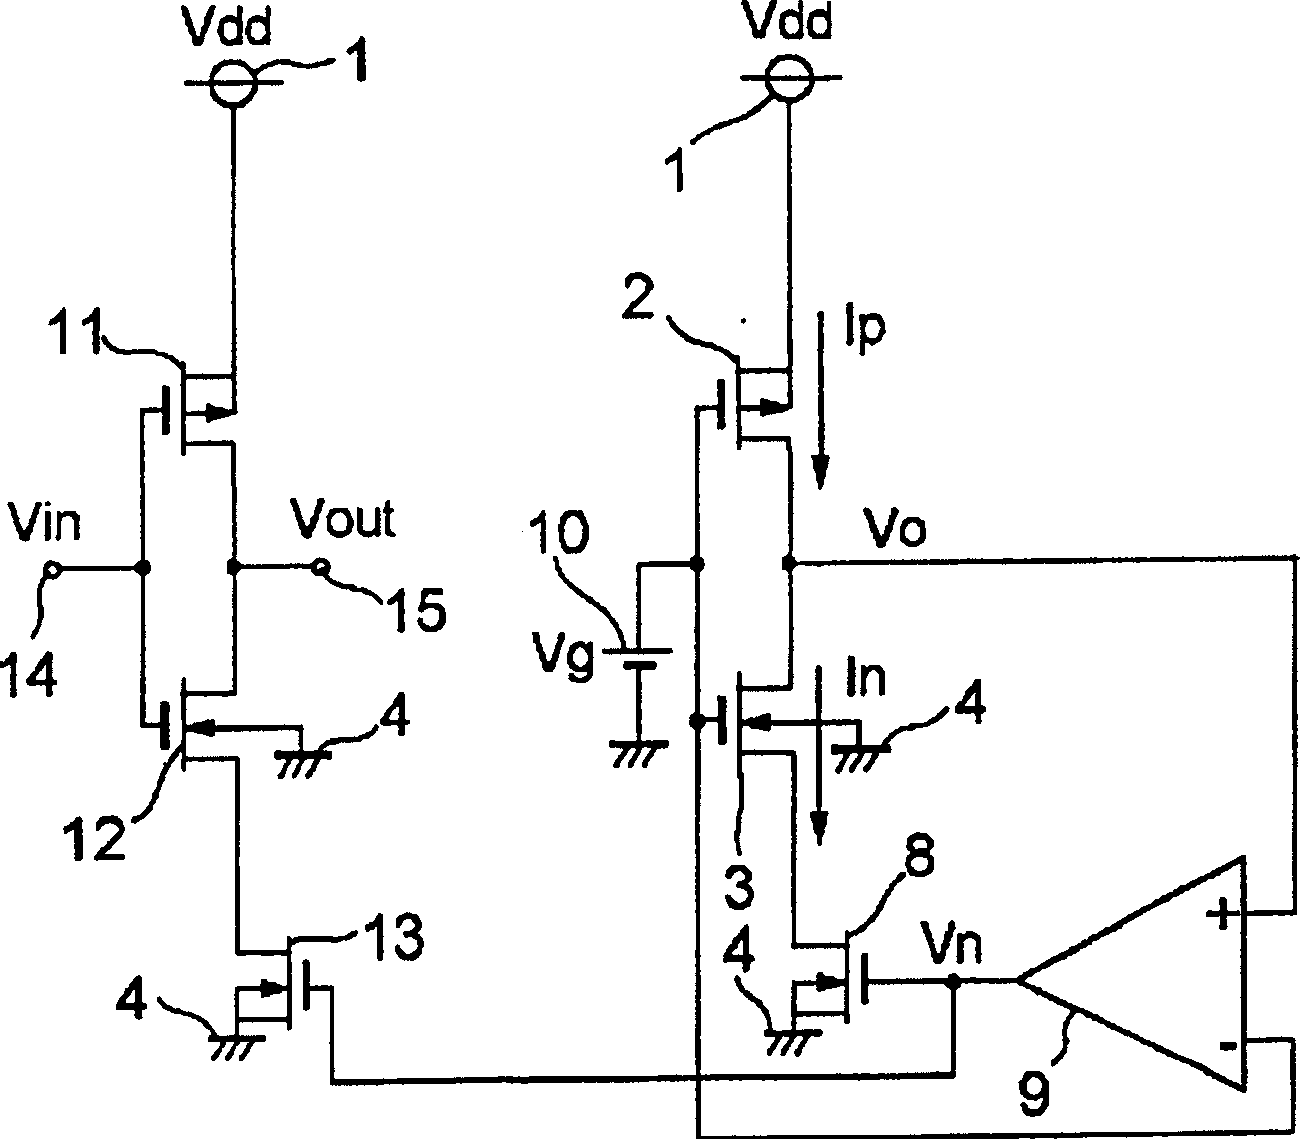 Amplification circuit